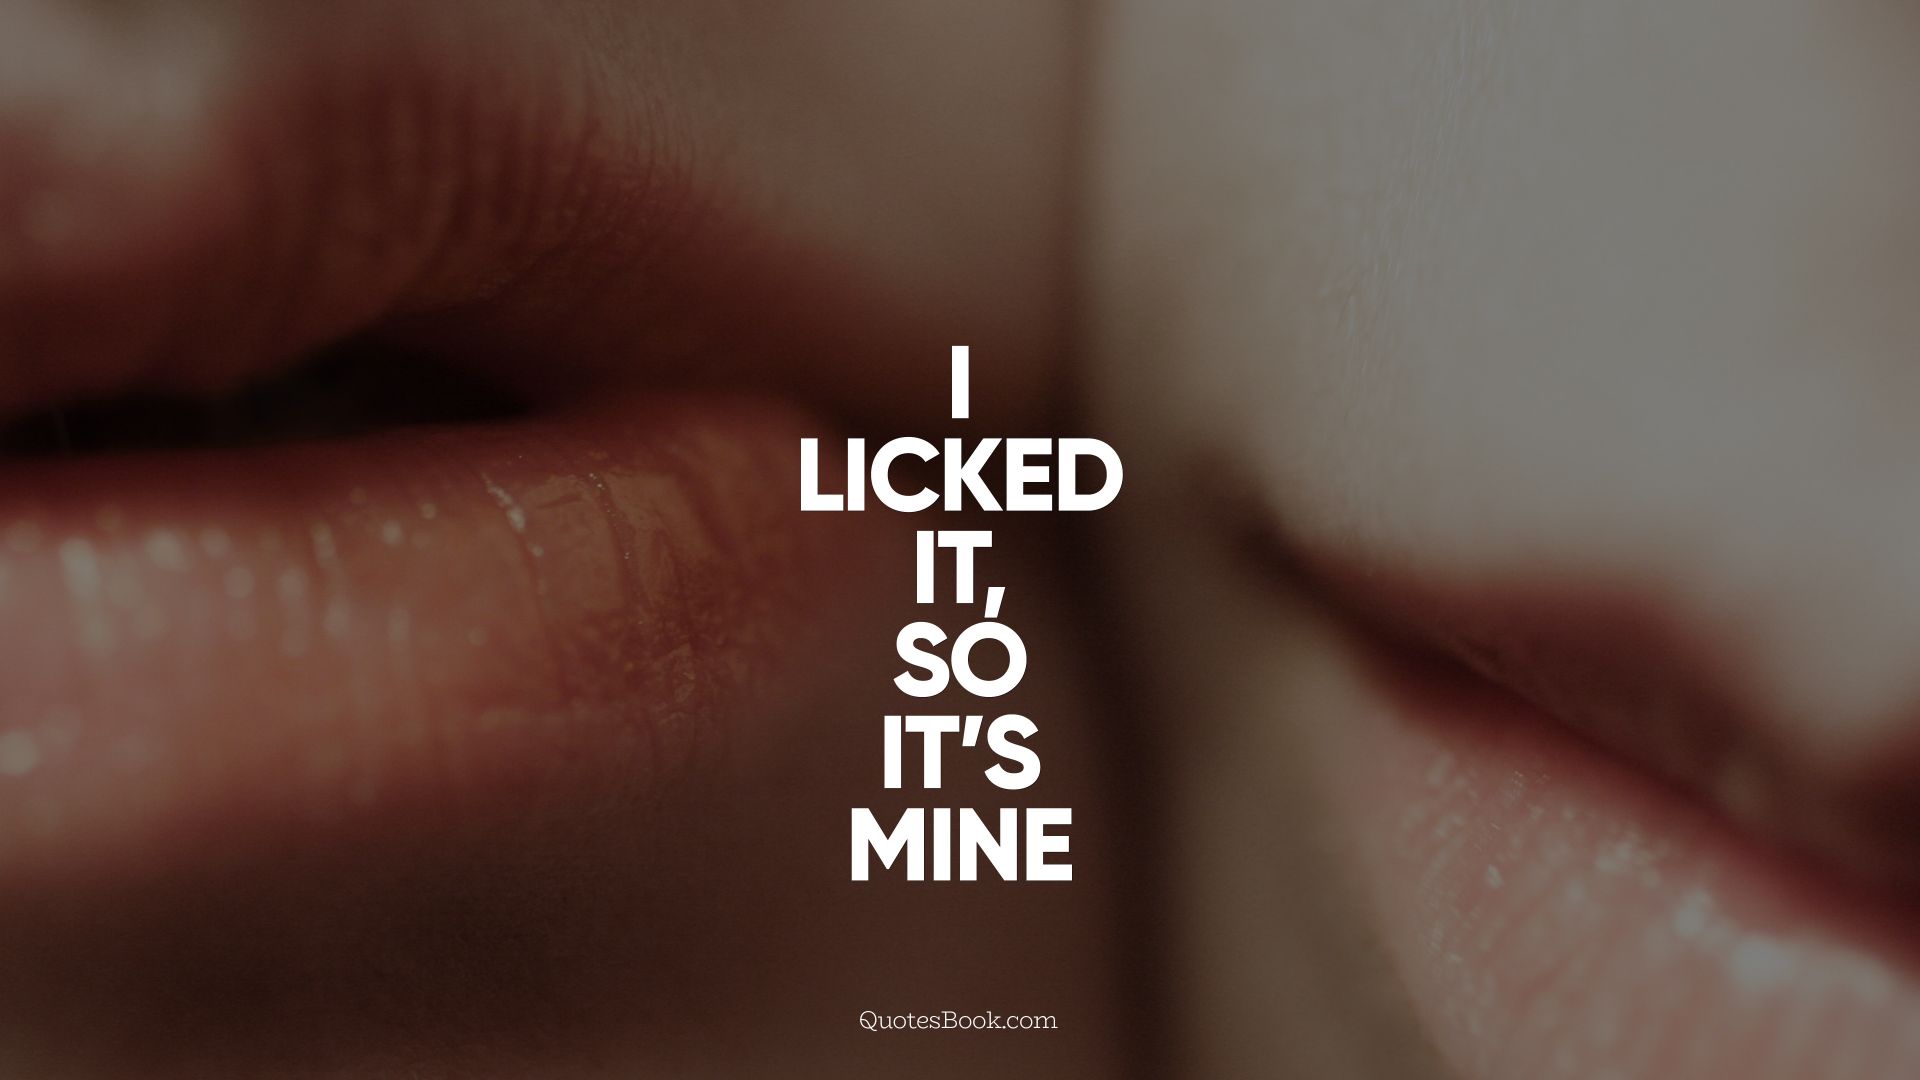 I licked it, so it's mine